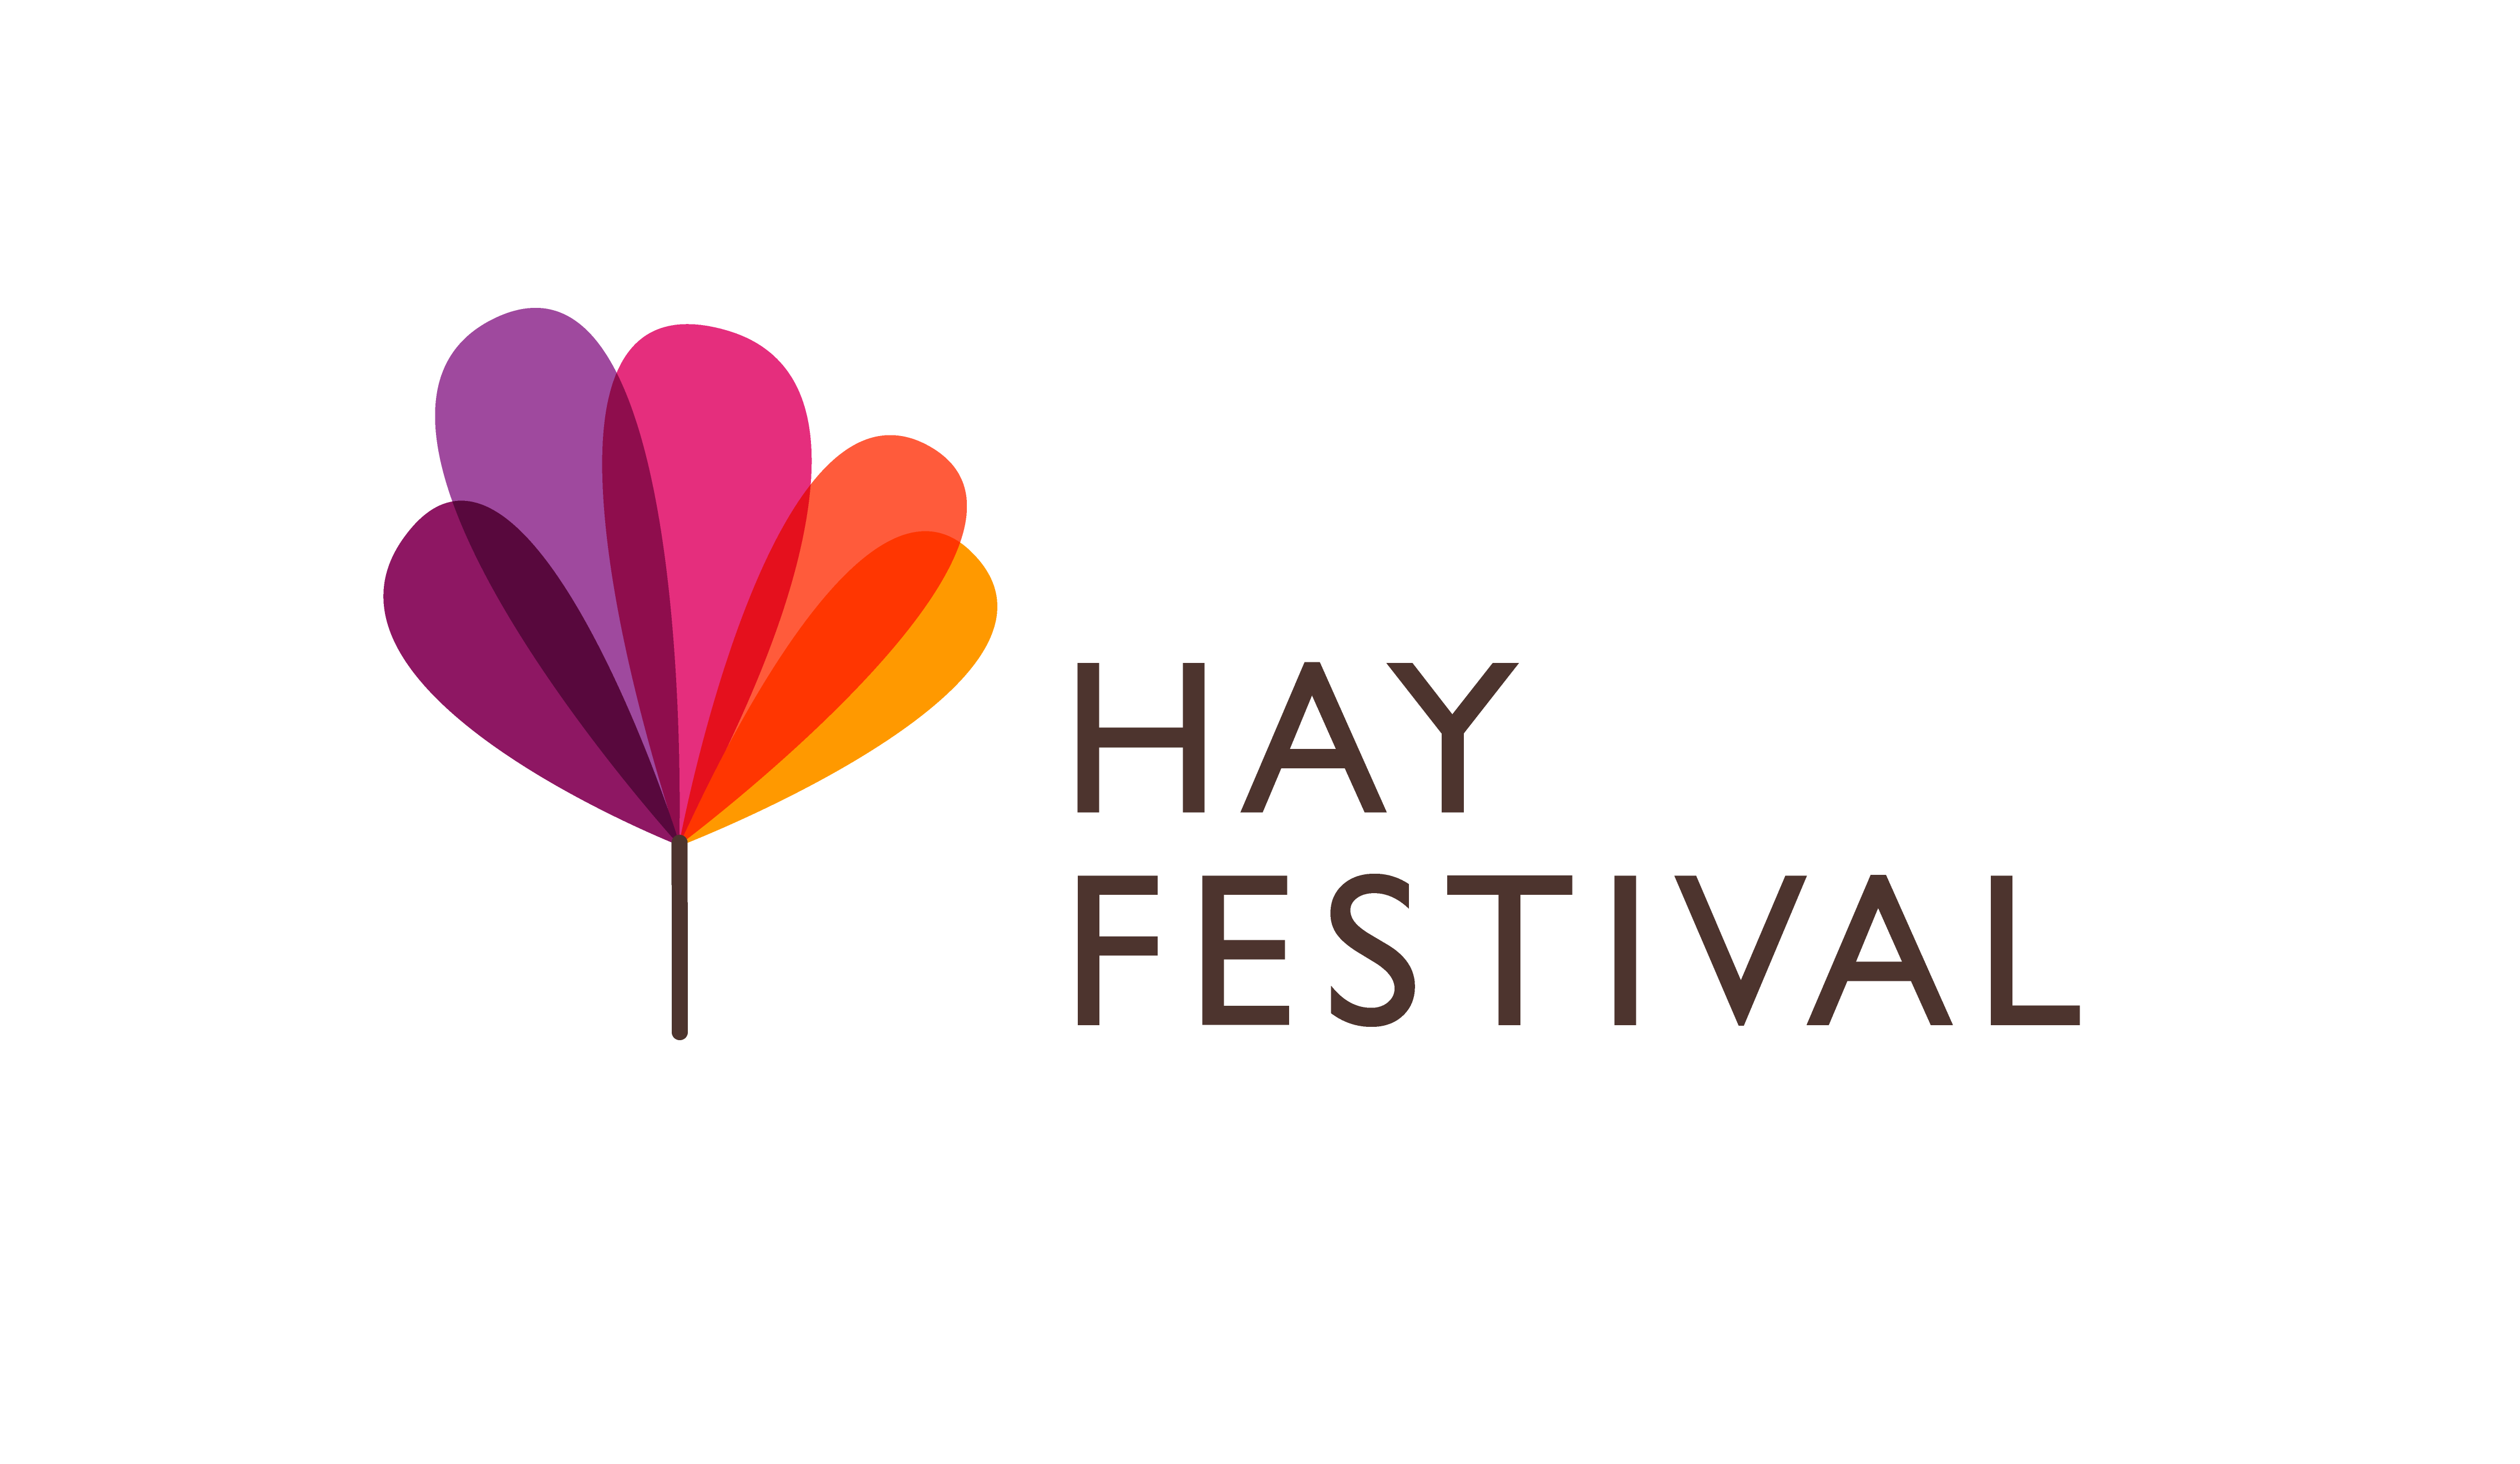 Hay Festival digital